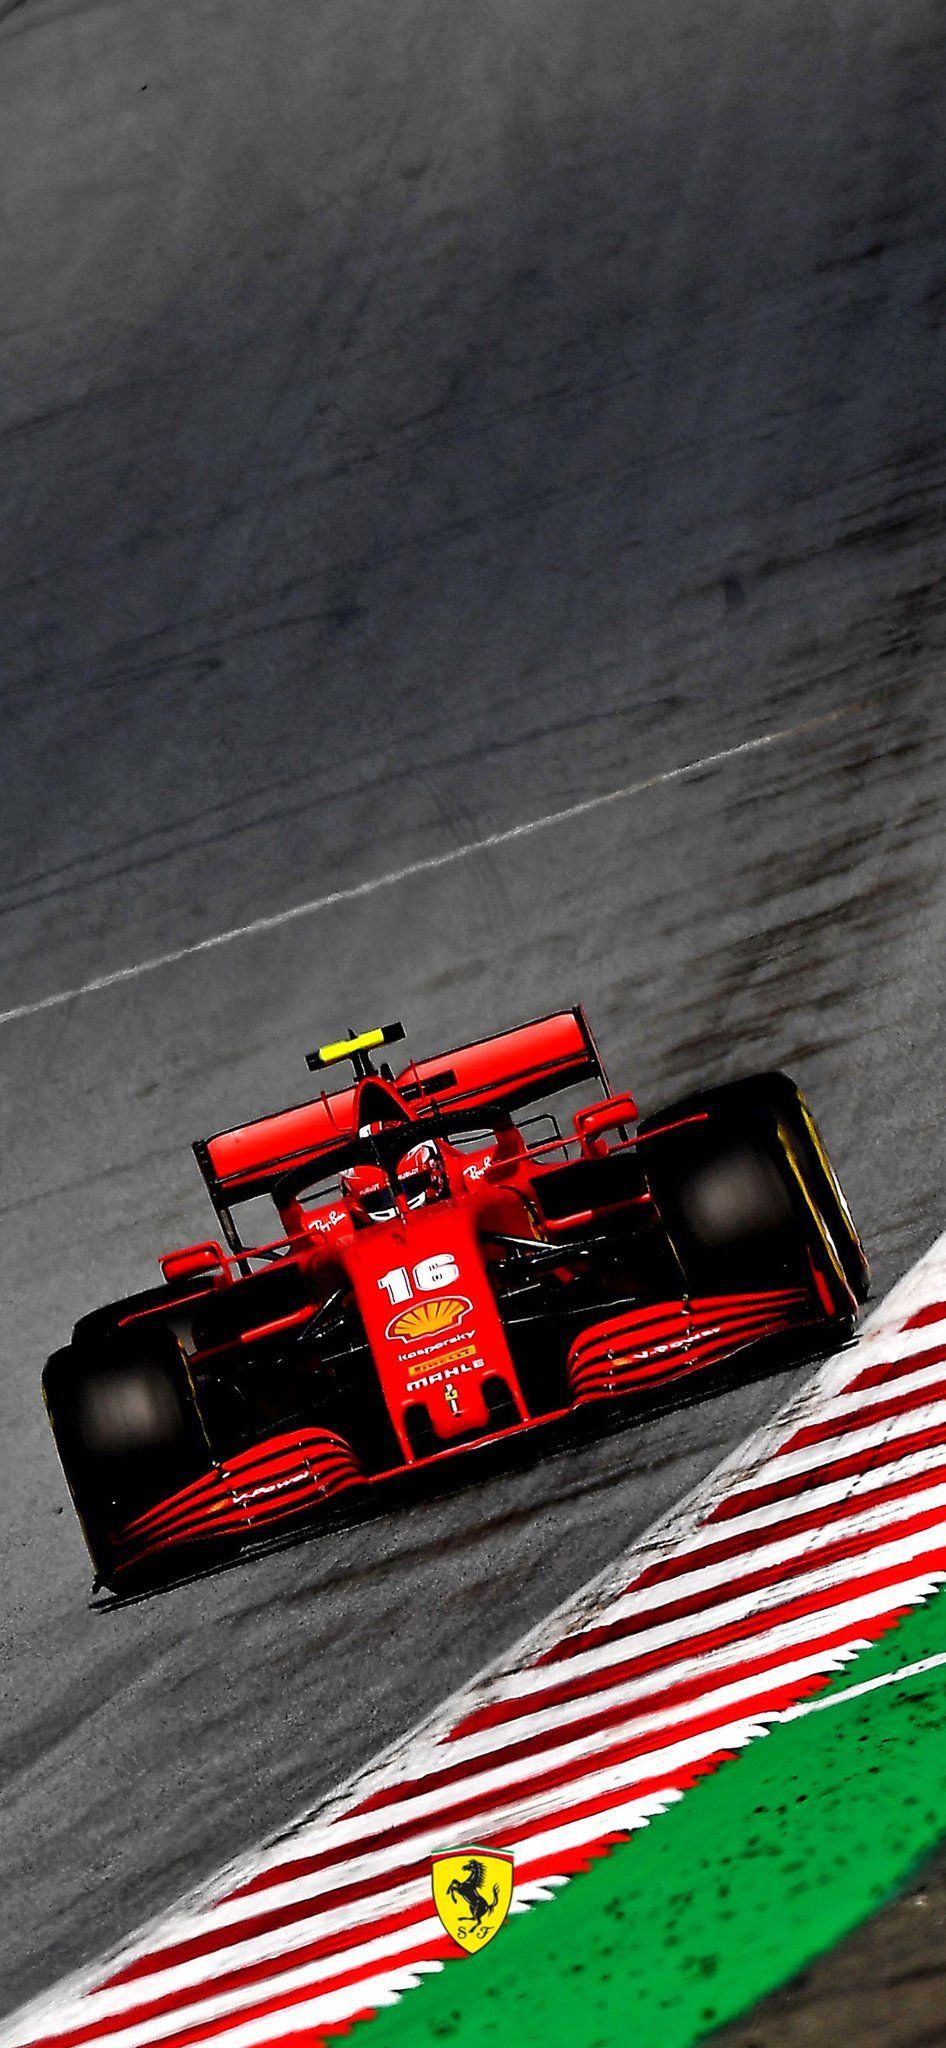 Scuderia Ferrari on Twitter. Car iphone wallpaper, Formula 1 iphone wallpaper, Ferrari